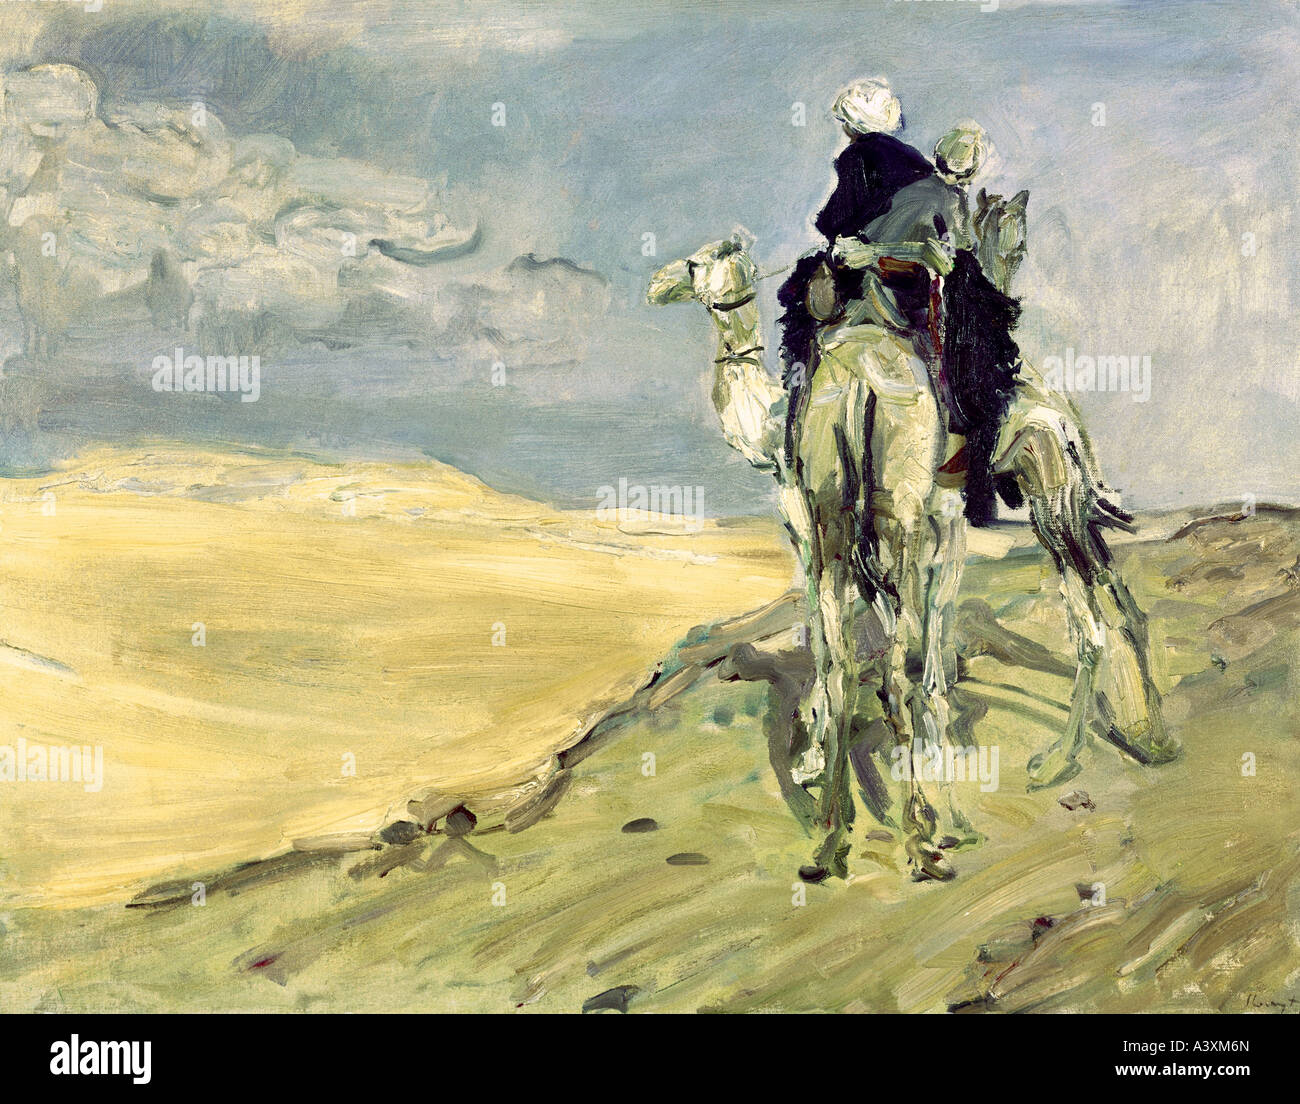 'fine arts, Slevogt, Max (8.10.1868 - 20.9.1932), painting 'Sandsturm in der Wüste', 1914, Gemäldegalerie Dresden German impre Stock Photo